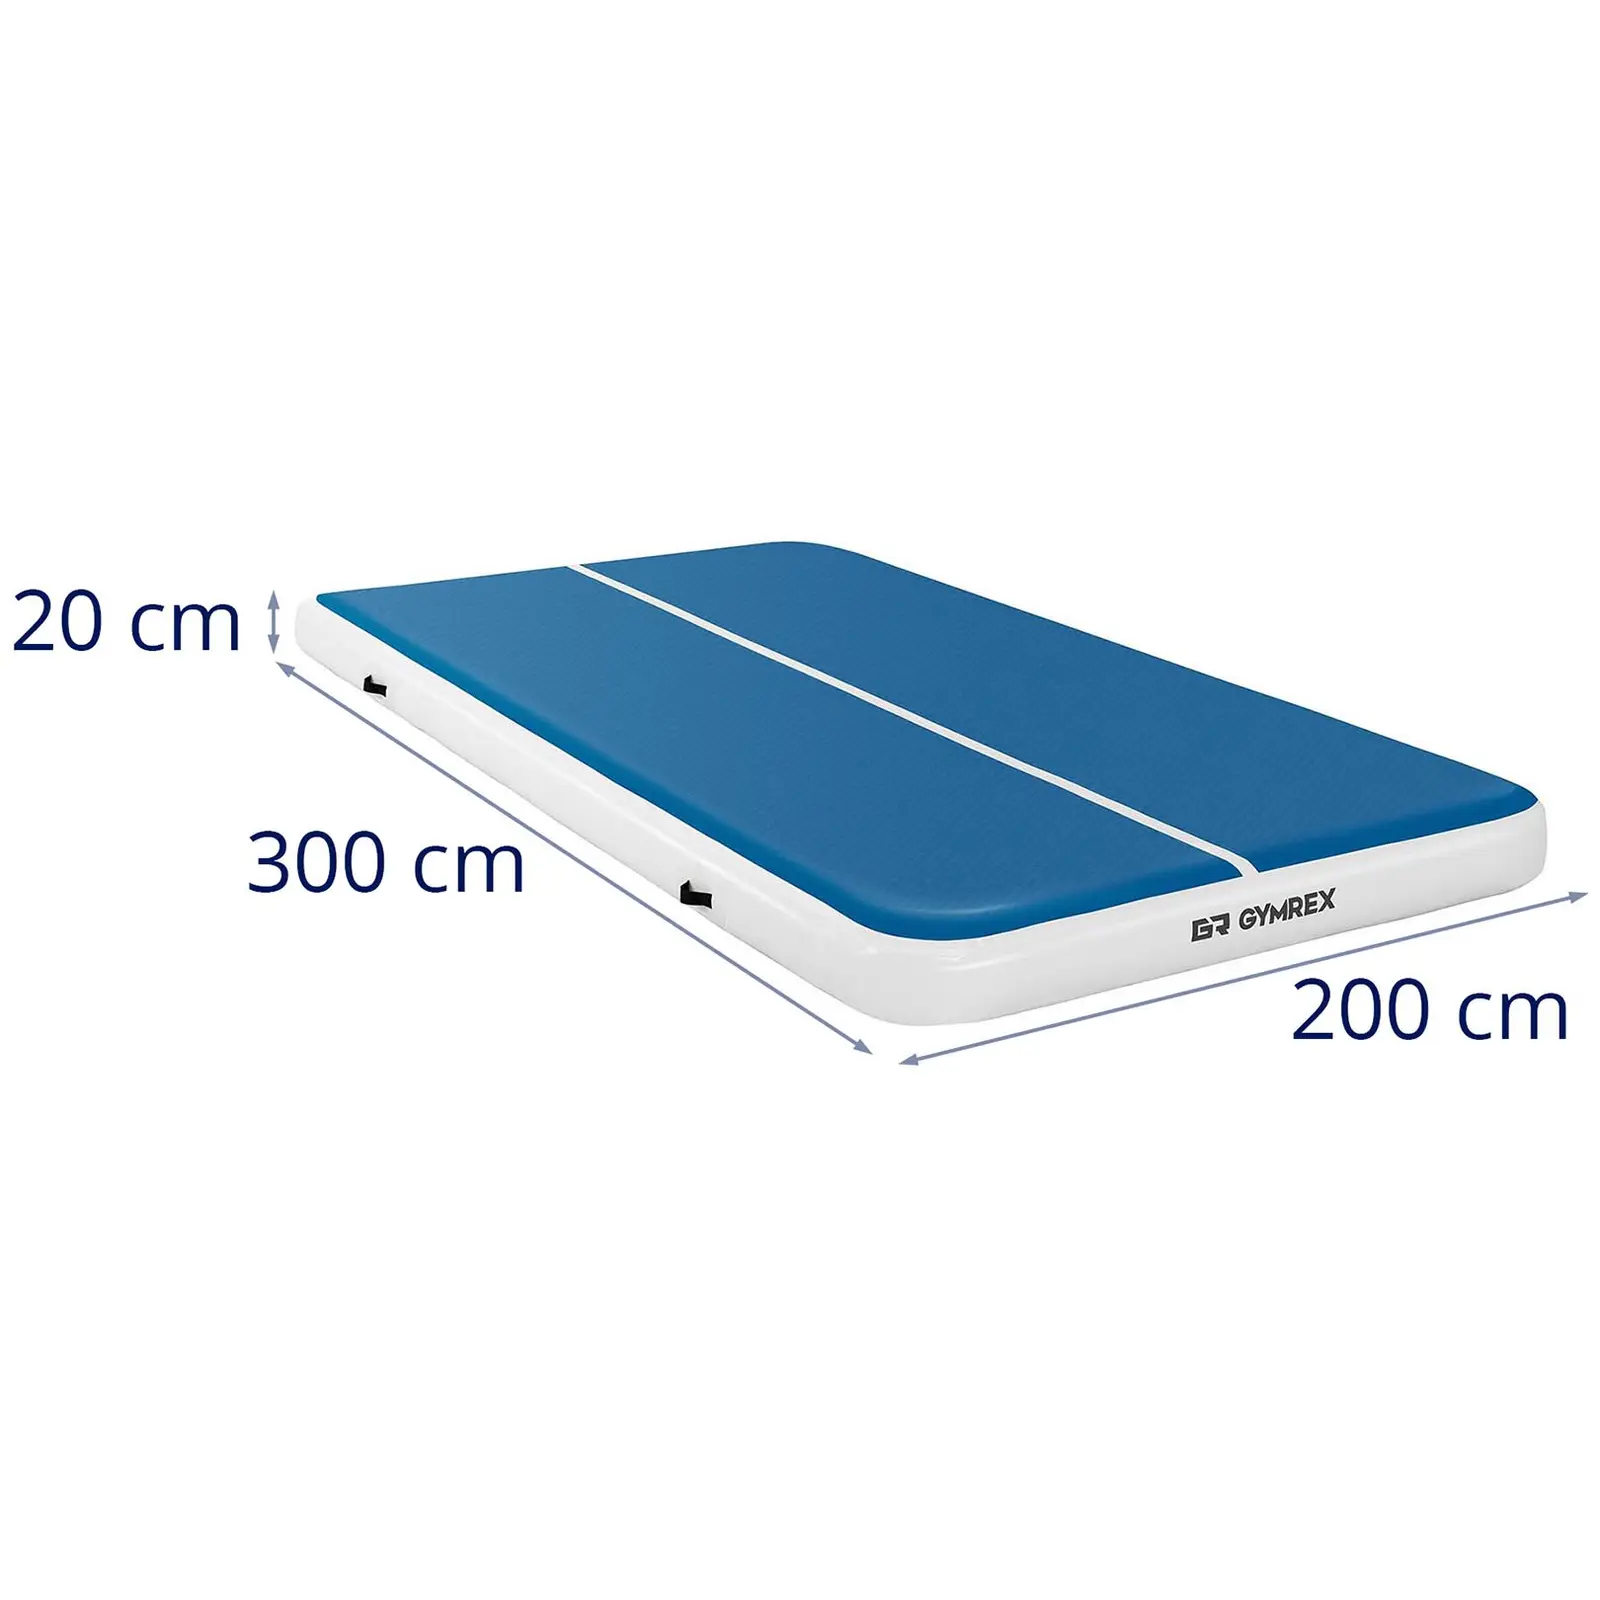 Nafukovací žíněnka - 300 x 200 x 20 cm - 300 kg - modrá/bílá